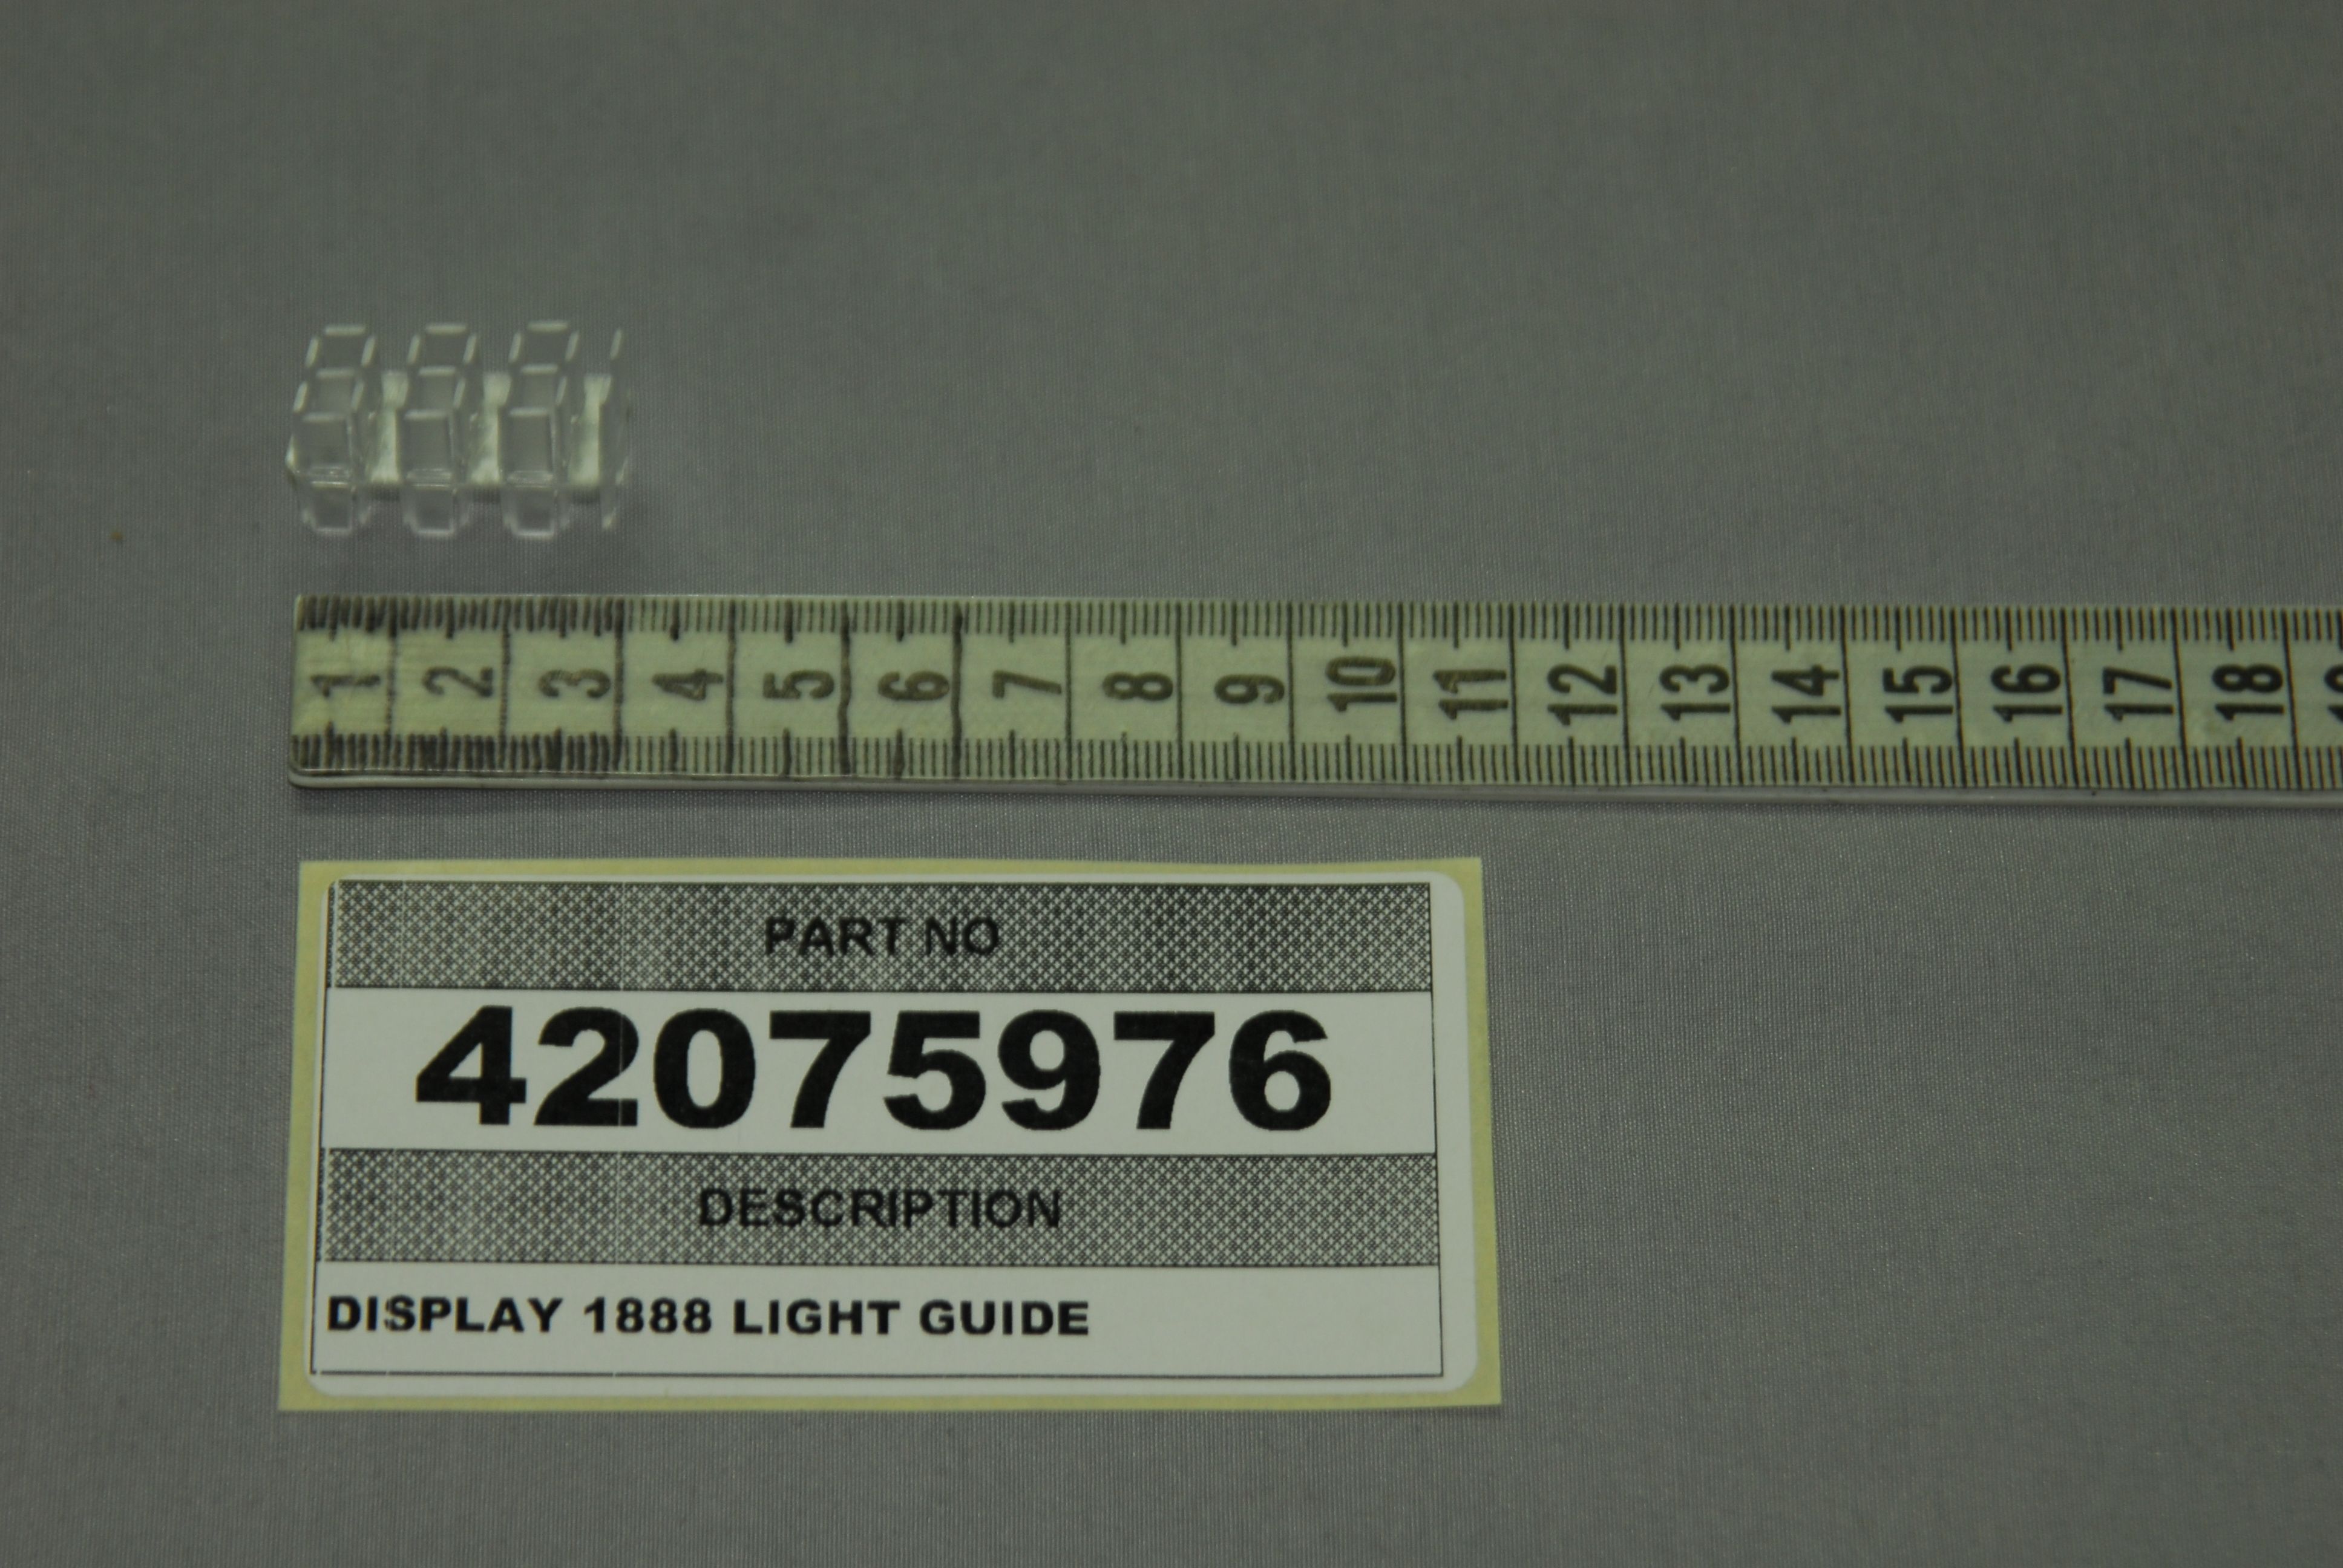 DISPLAY 1888 LIGHT GUIDE - 42075976 - CONFORTEC